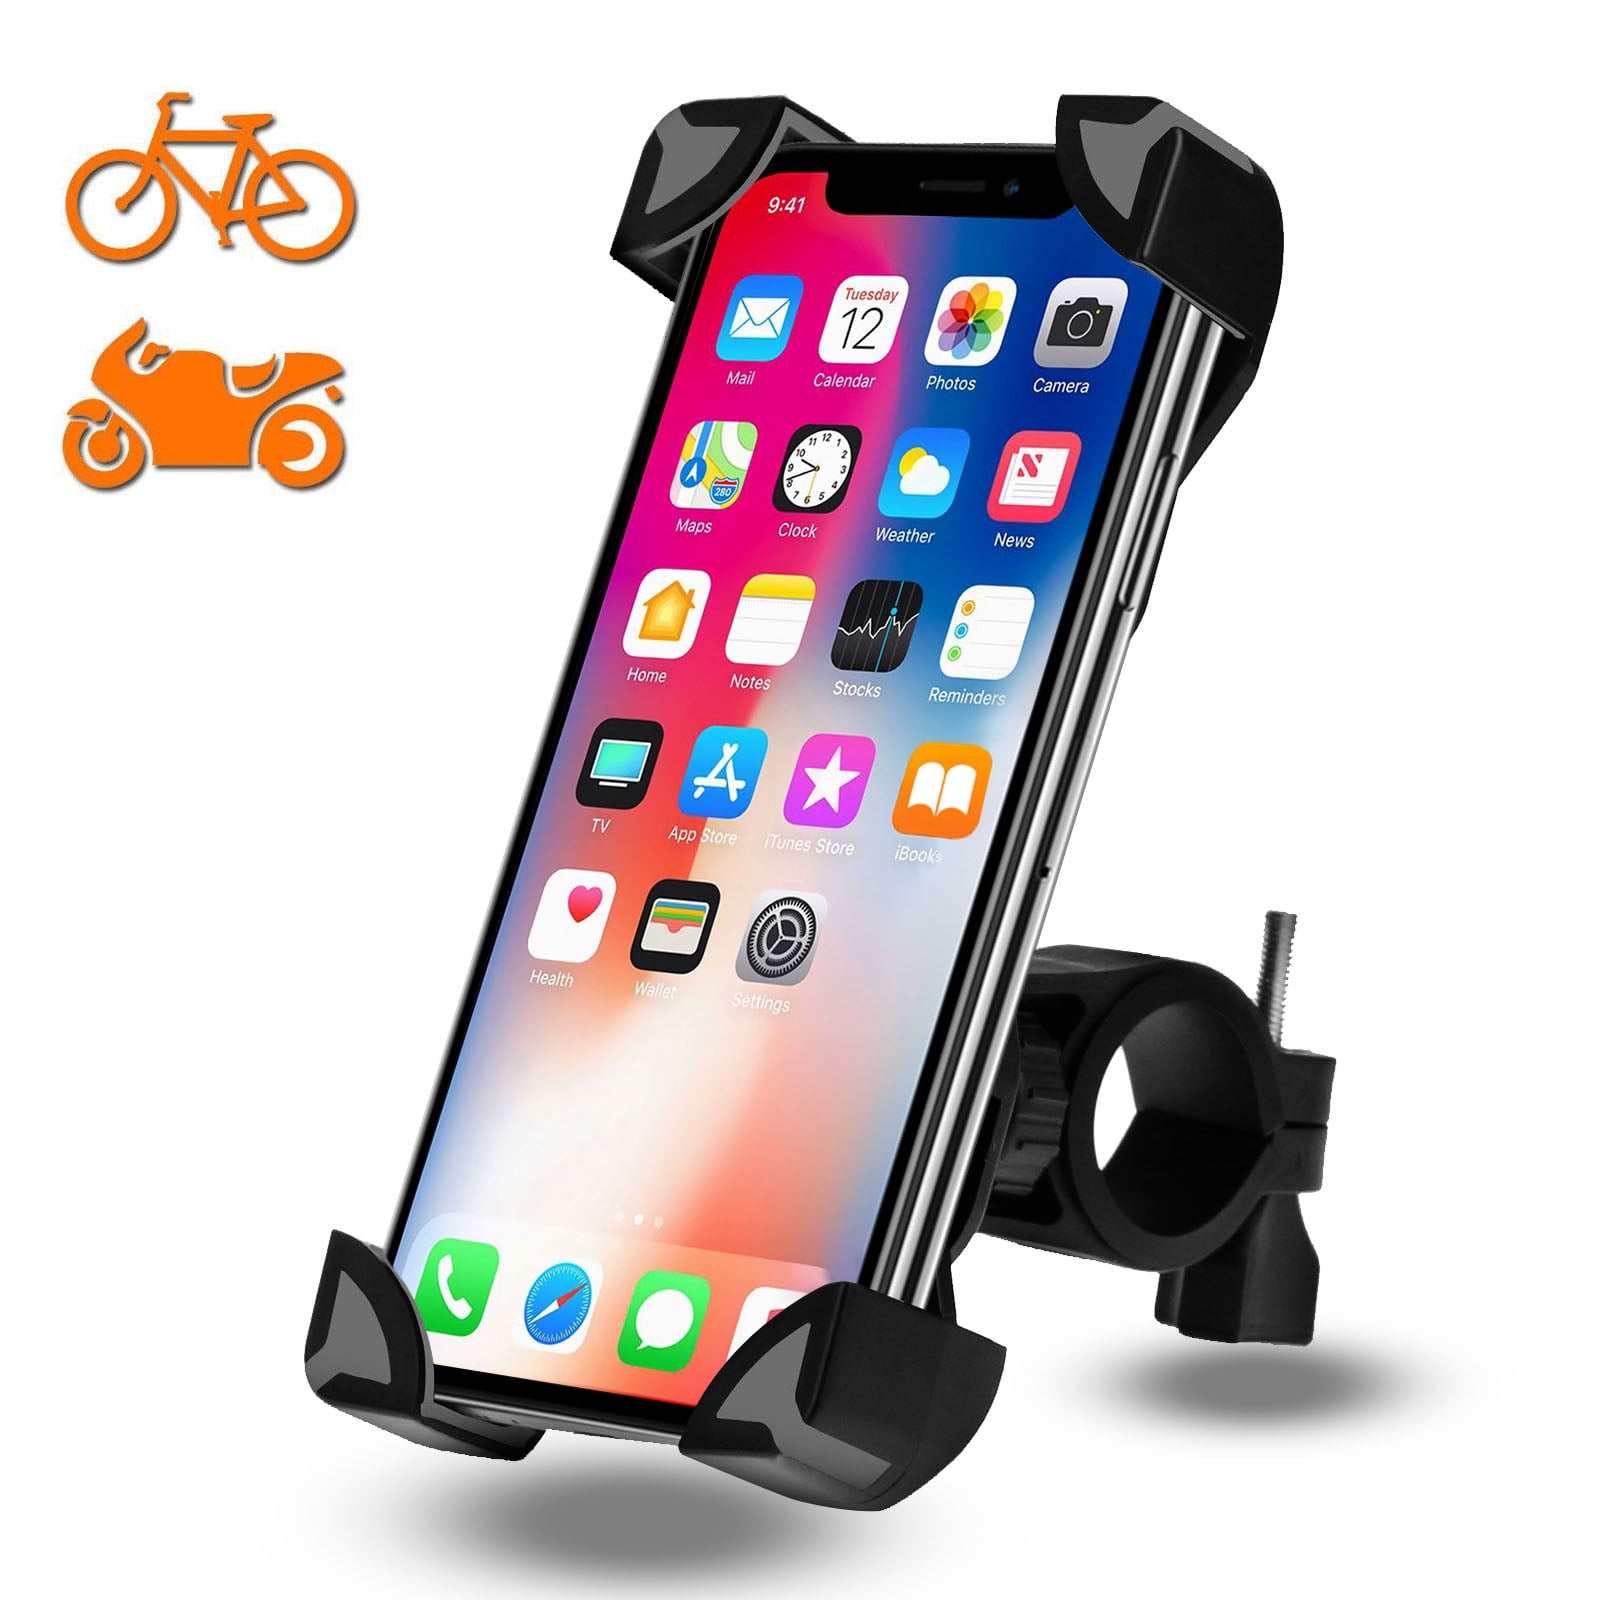 Motorbike Bike Phone Holder Universal Adjustable Mount Stand for iPhone Samsung